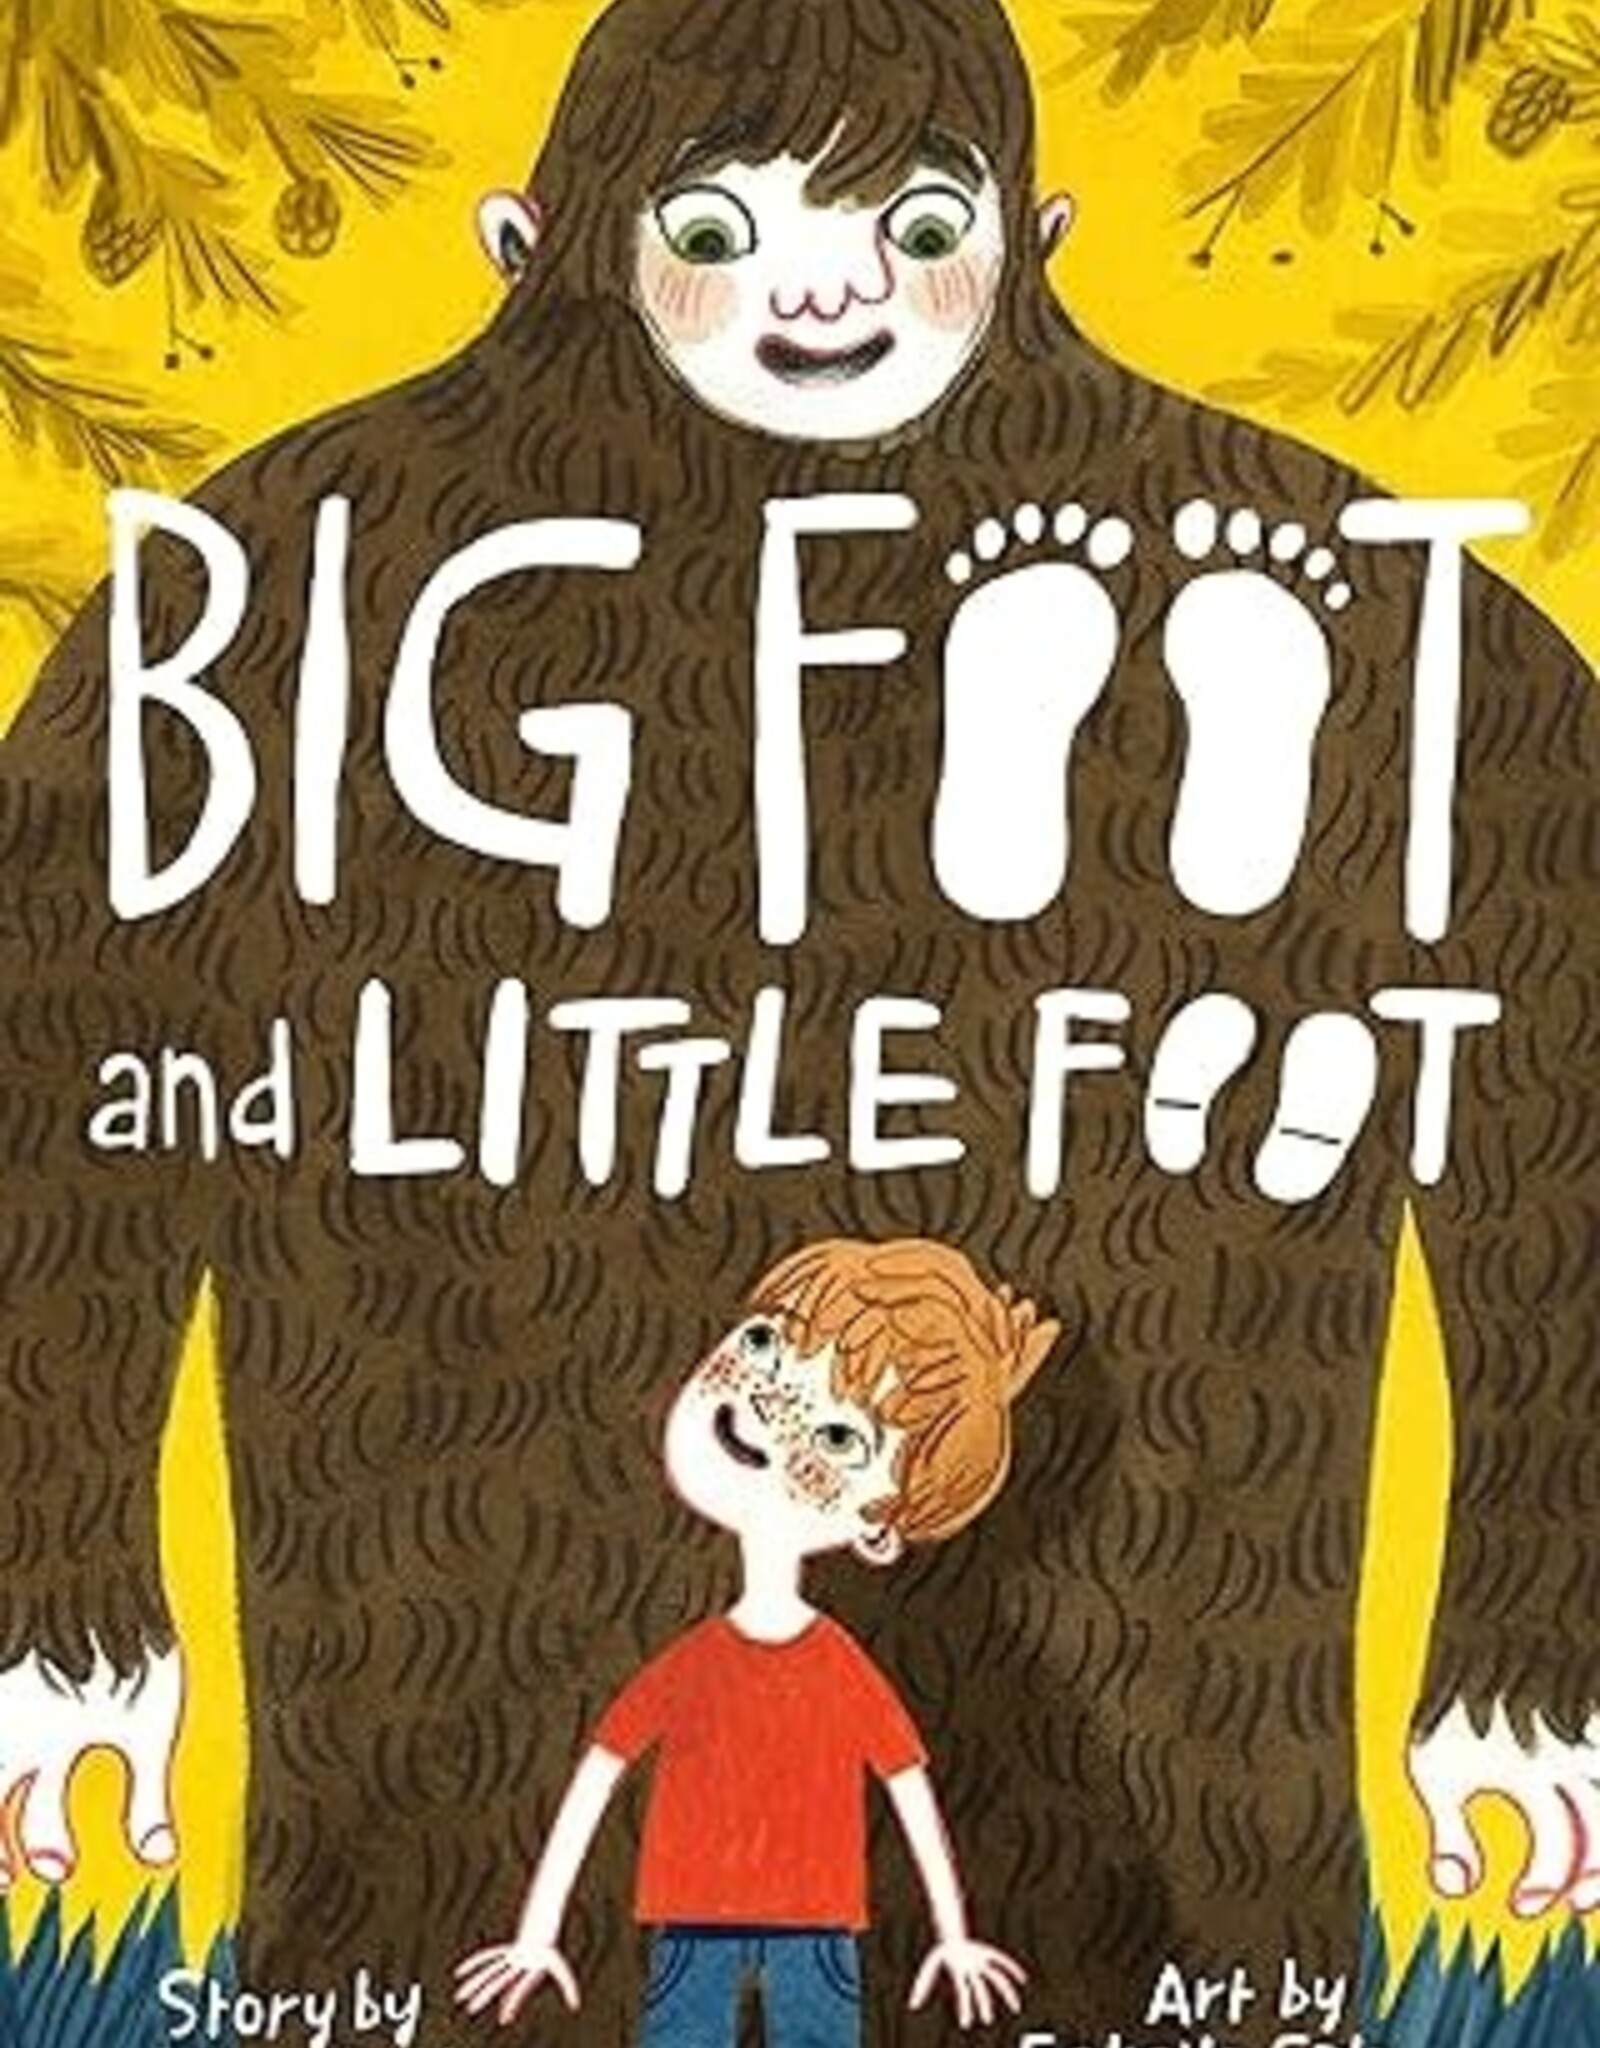 Big Foot Little Foot